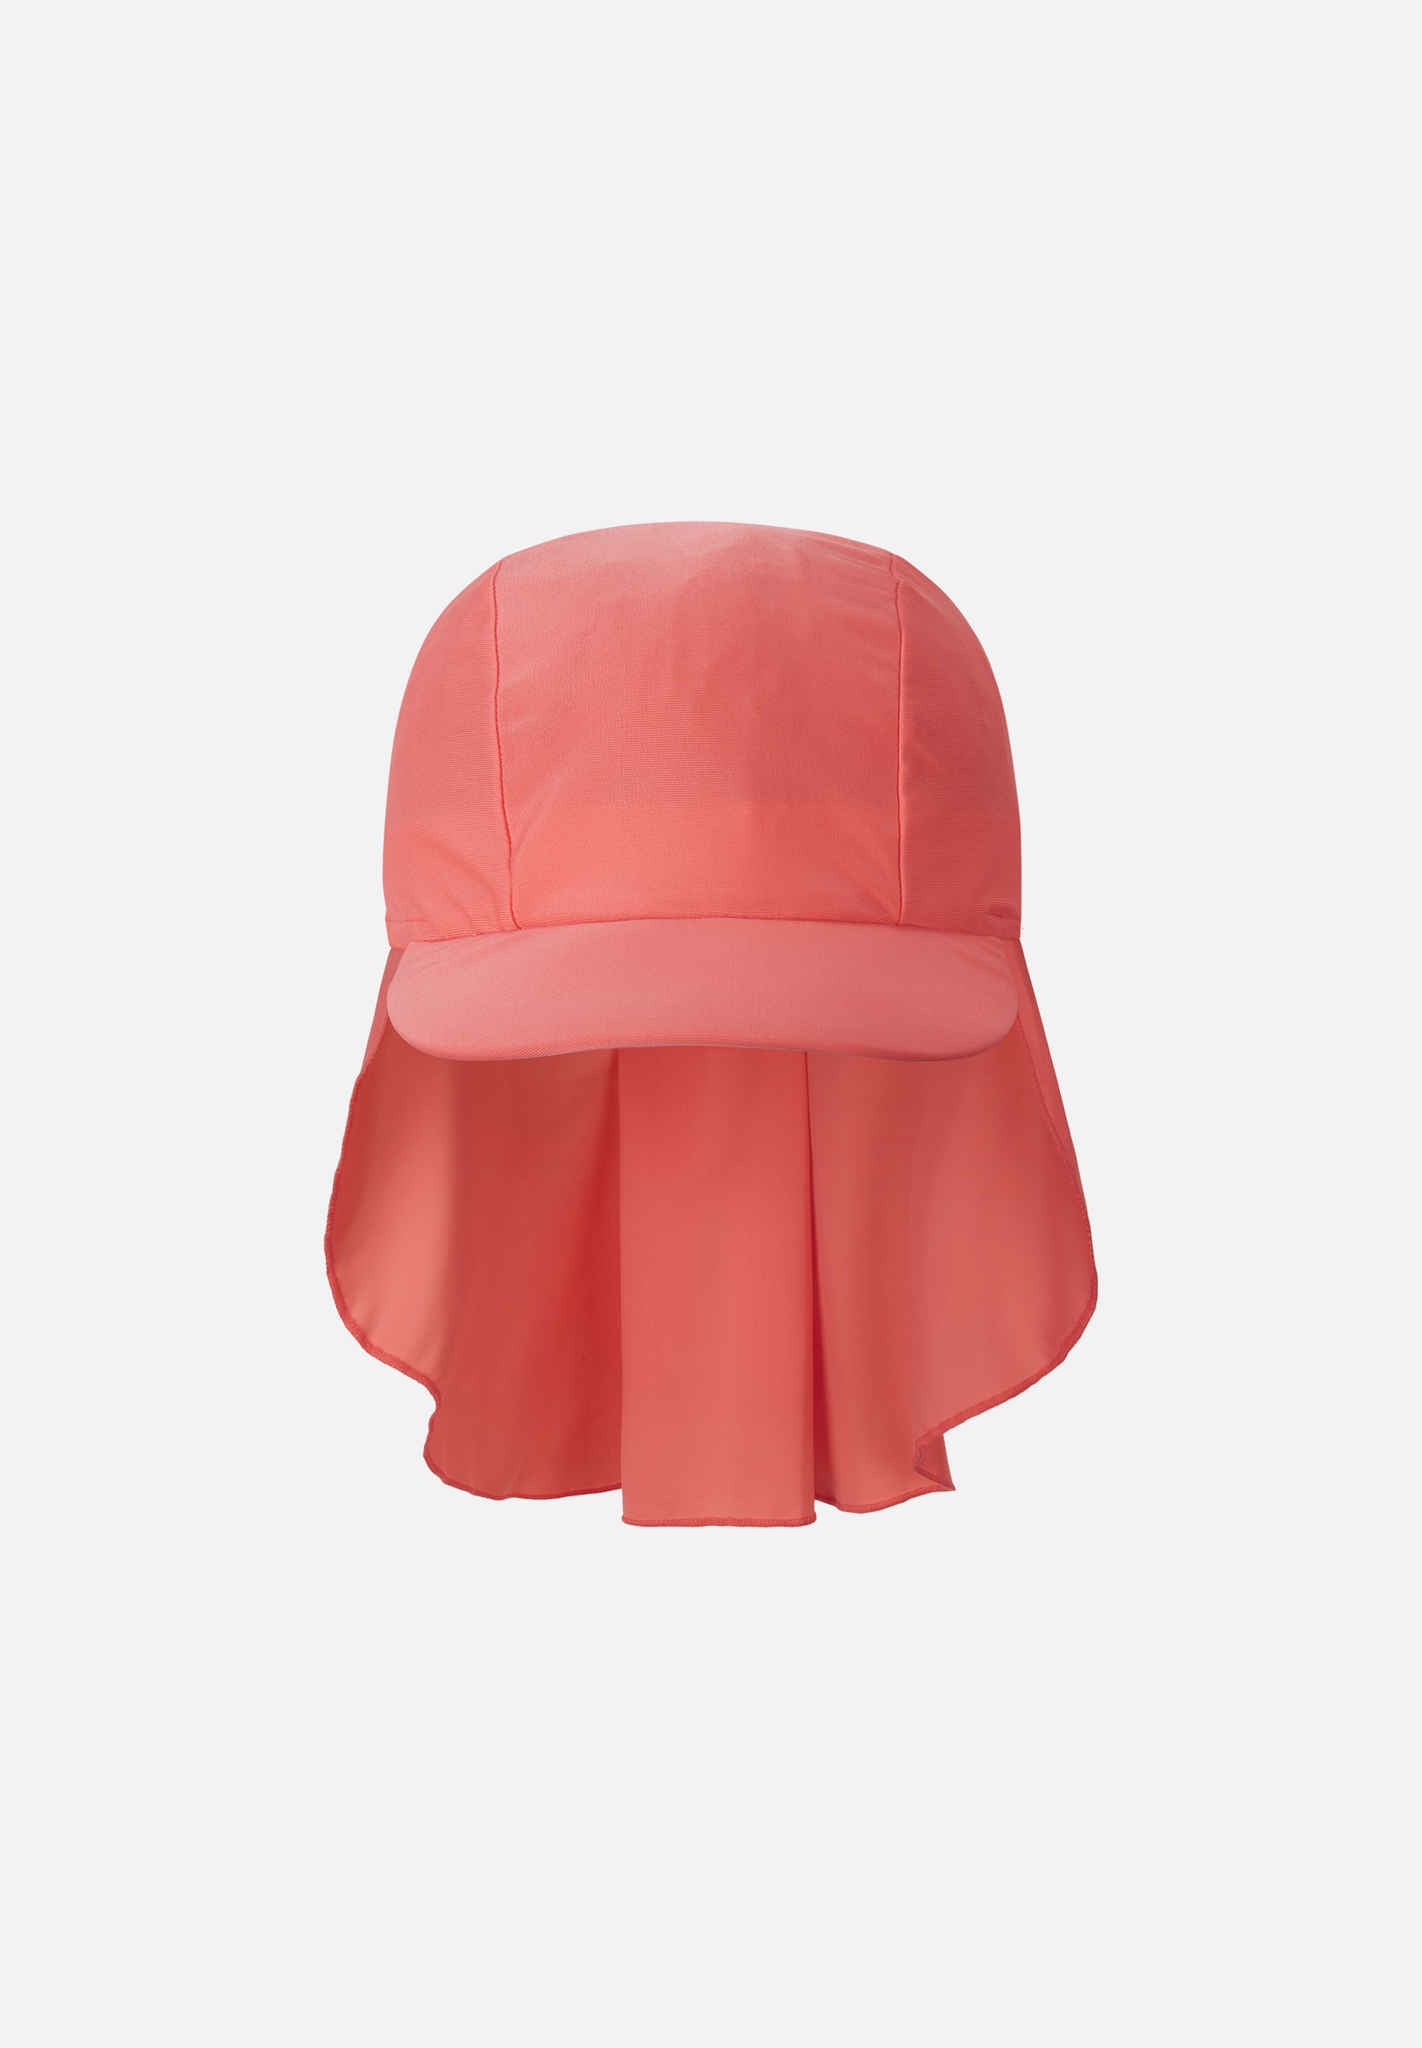 Kjøp Reima Sura Sunproof Hat fra Outnorth